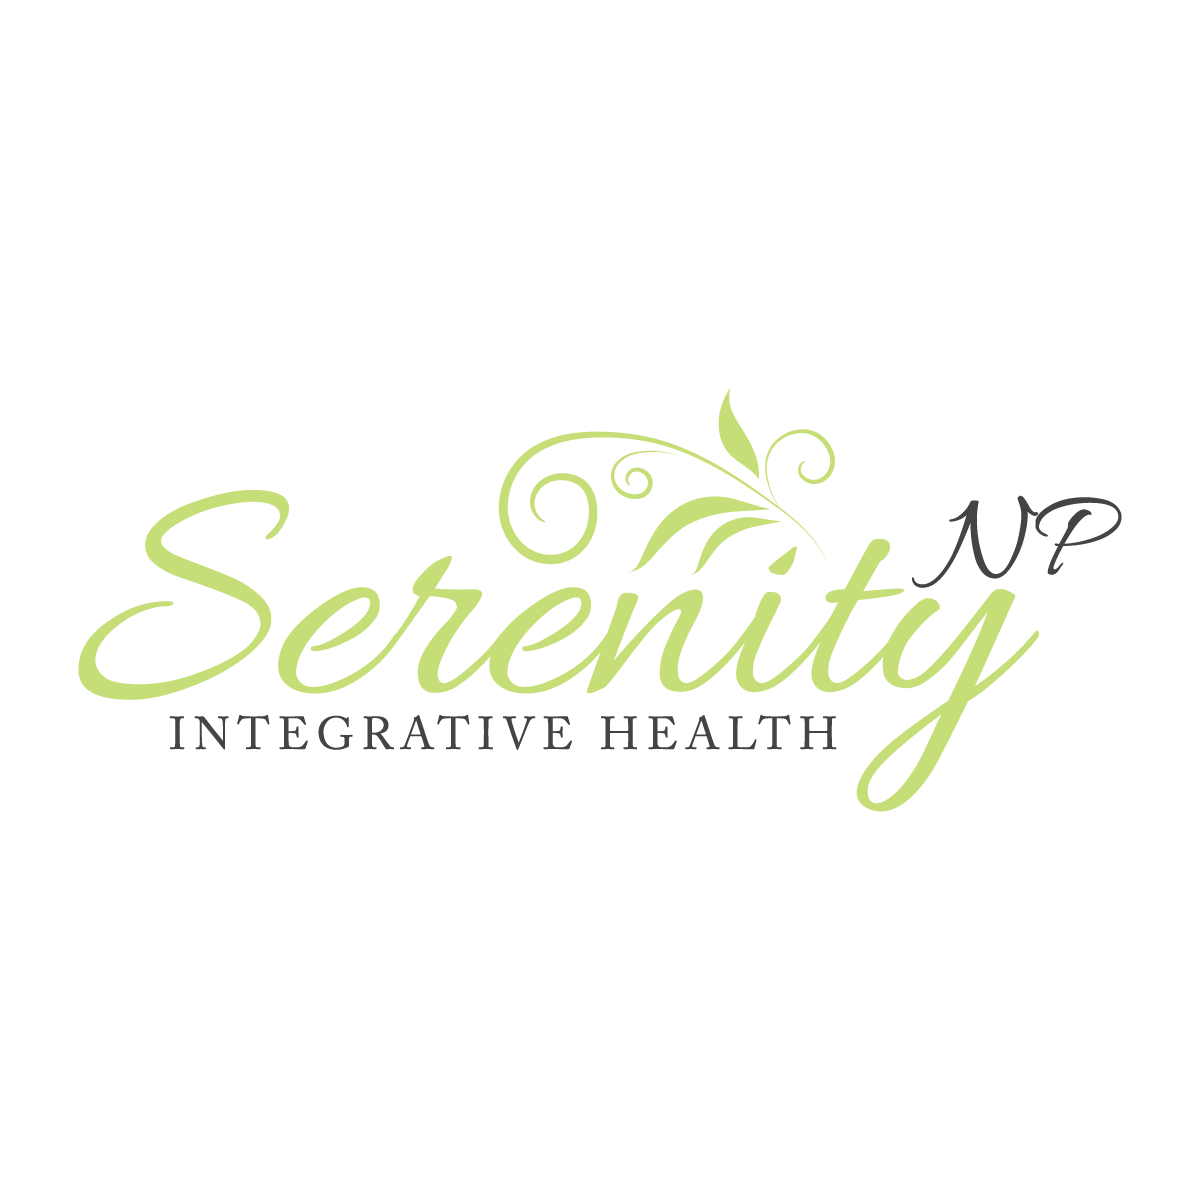 SerenityNP Integrative Health - Crystal Lake, IL 60014 - (815)281-5515 | ShowMeLocal.com